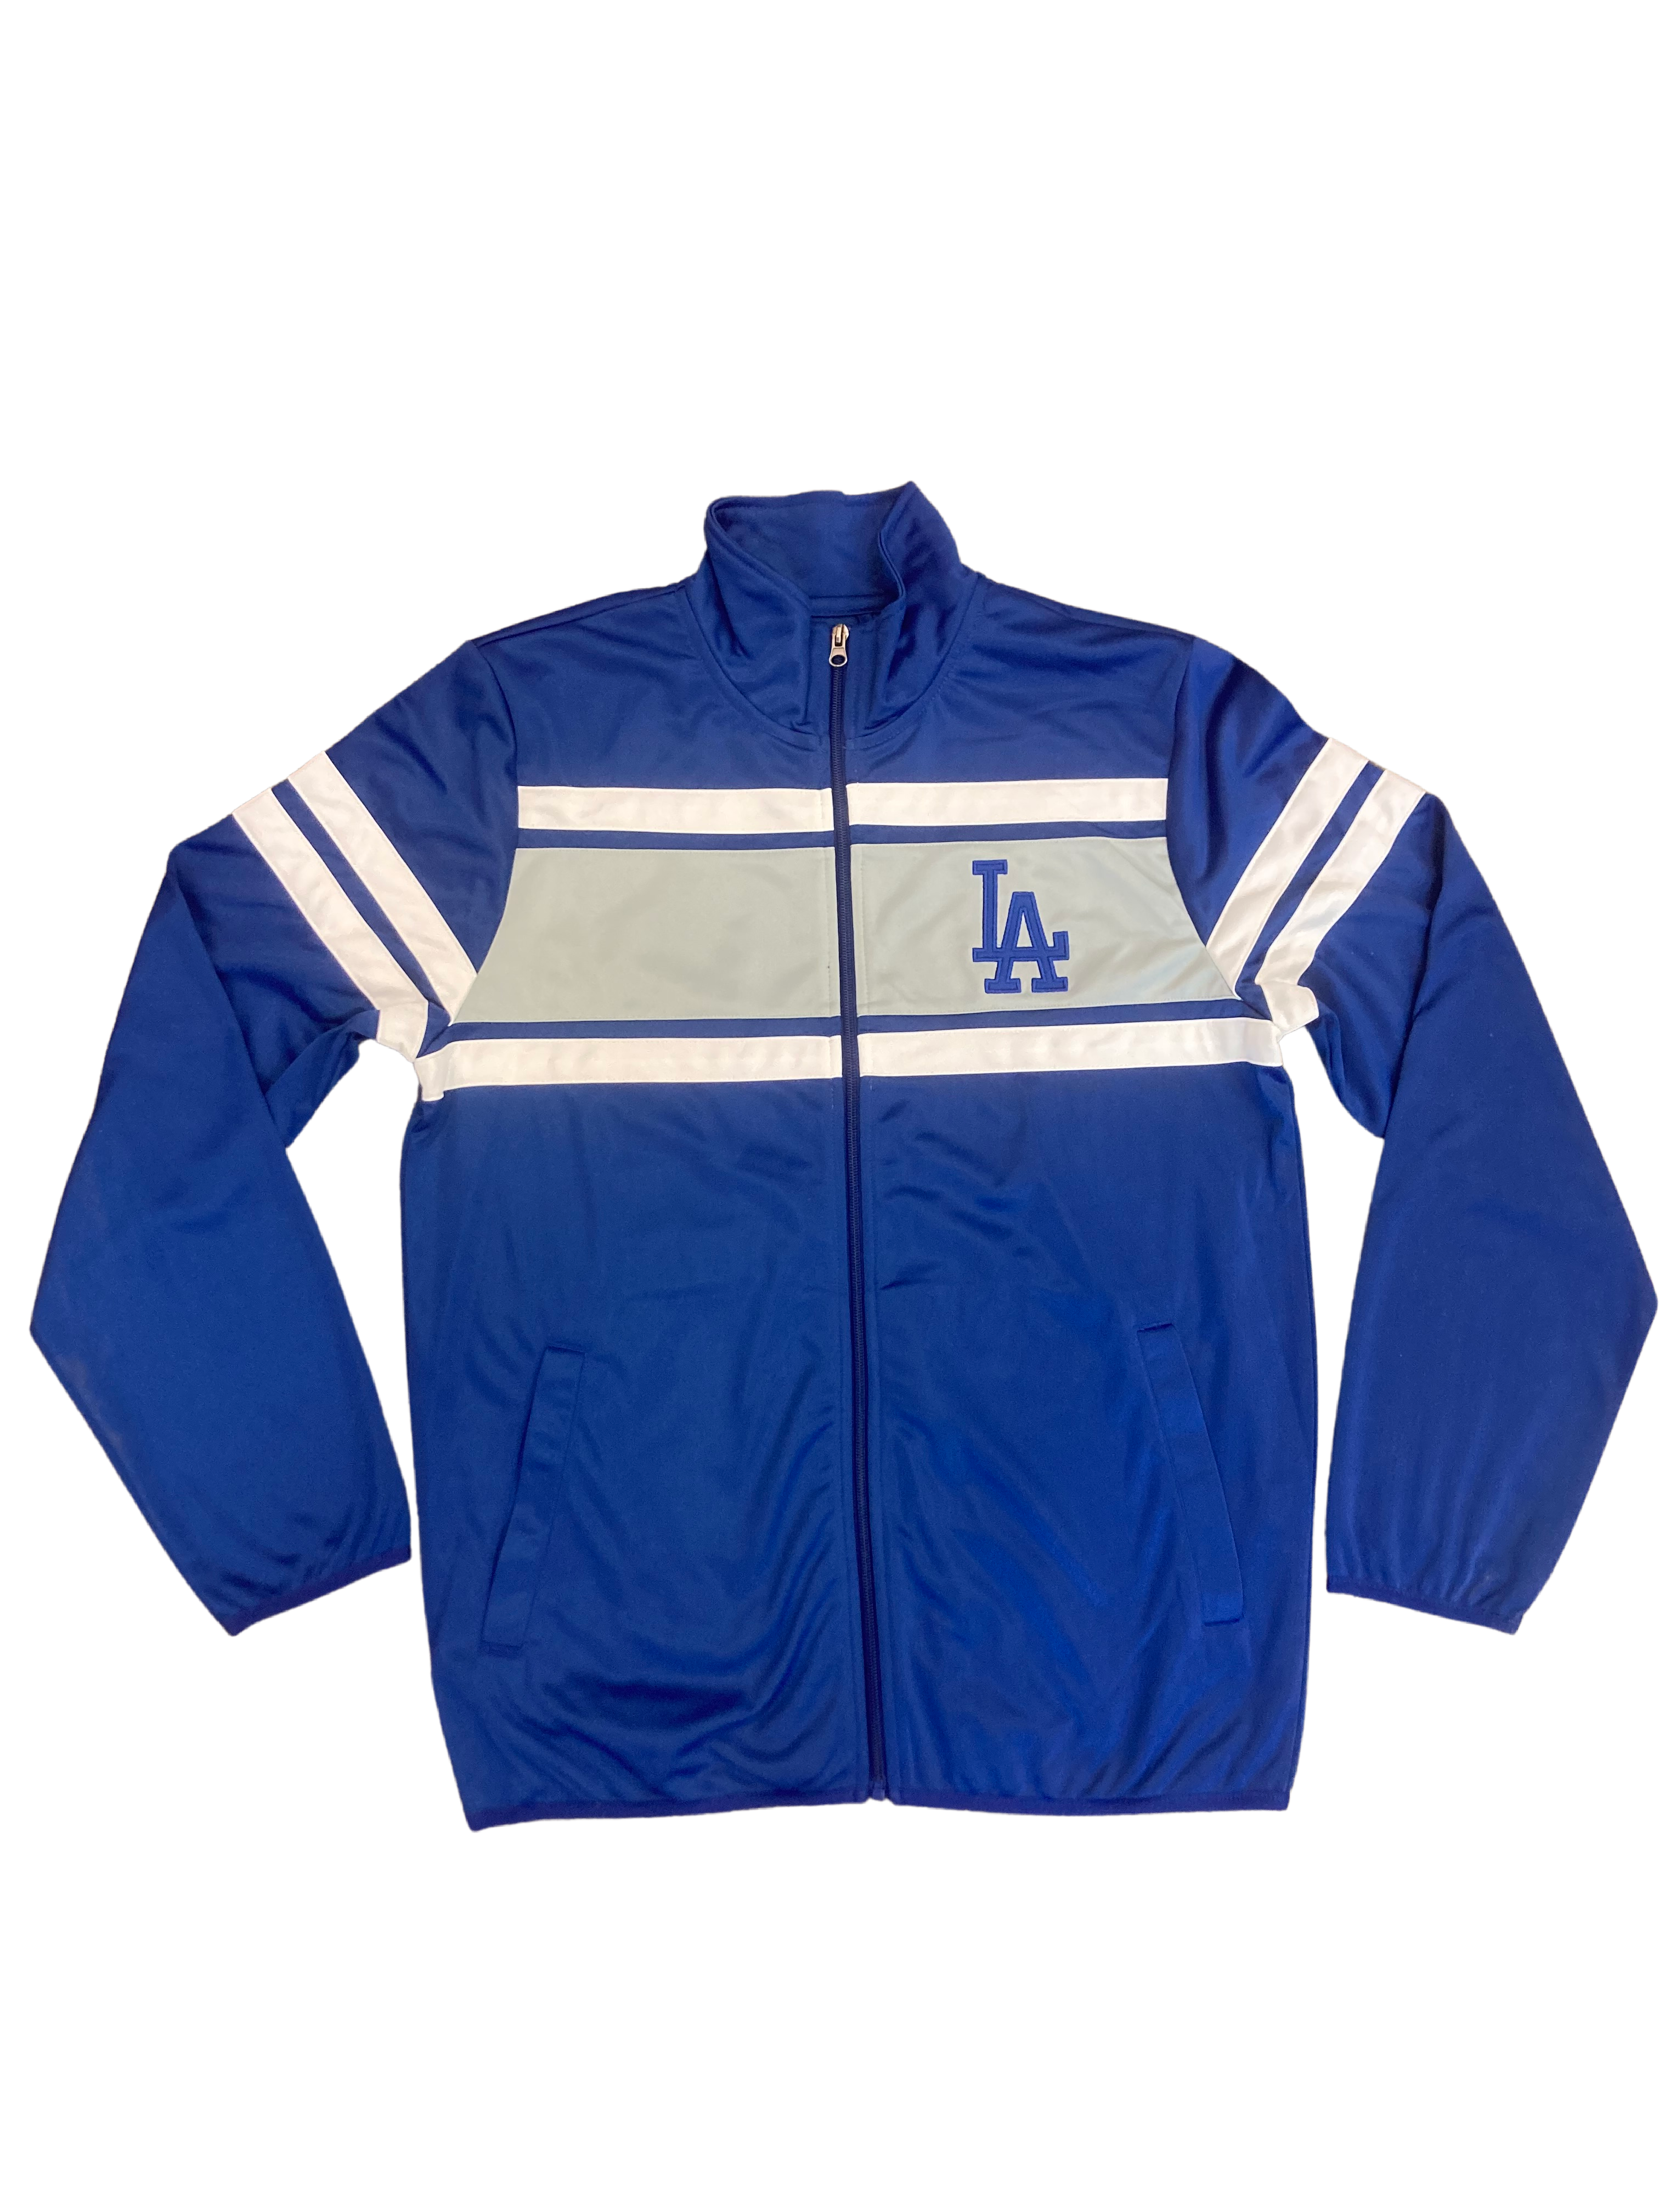 LA Dodgers G-III Full-Zip Track Jacket - Blue/Grey/White